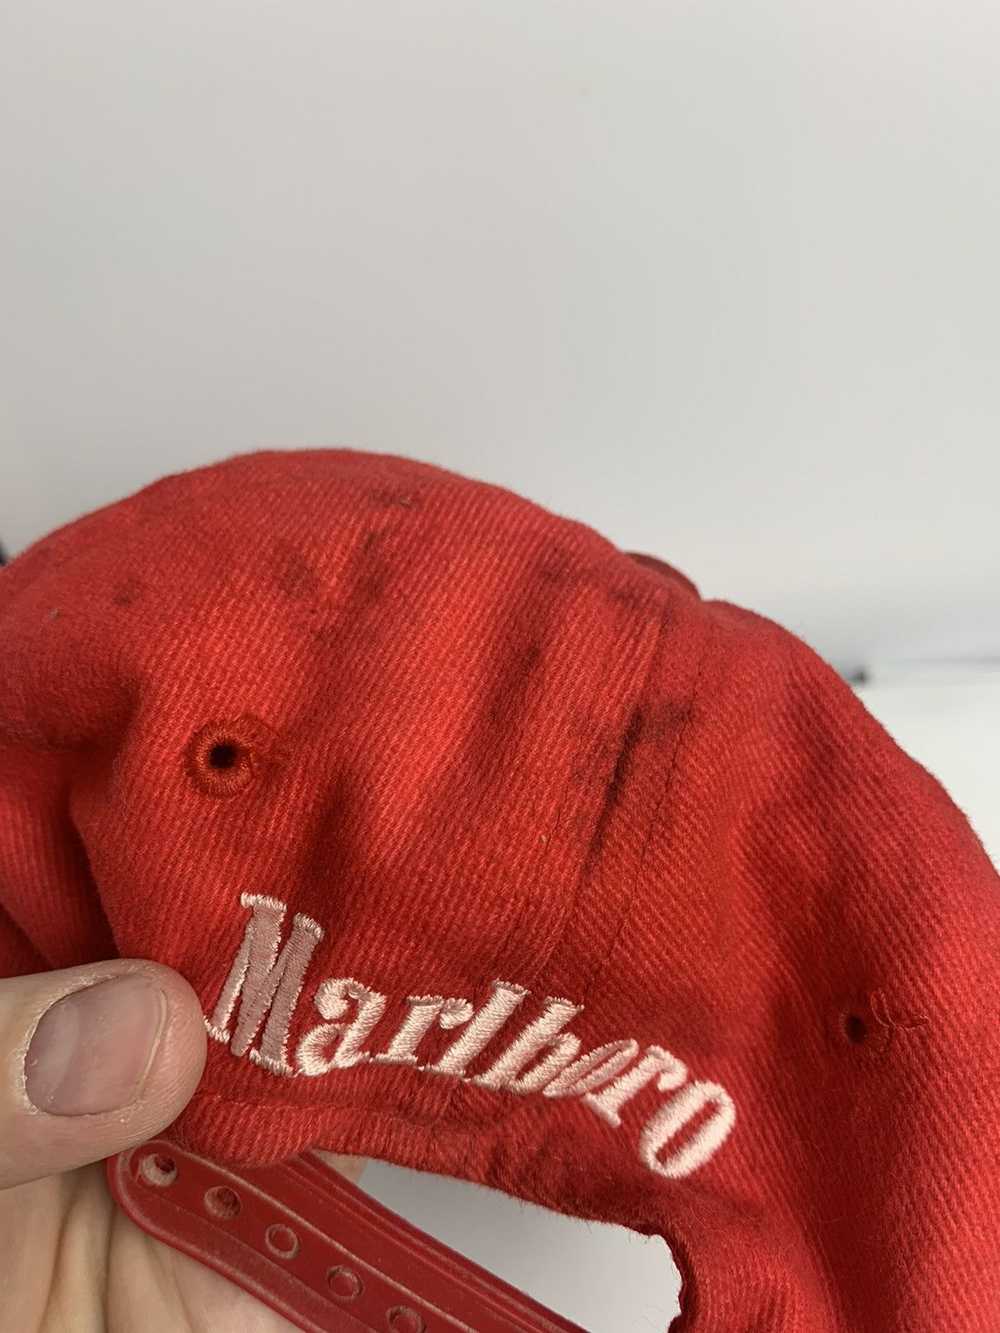 Marlboro × Vintage Vintage cap Marlboro rare red - image 9